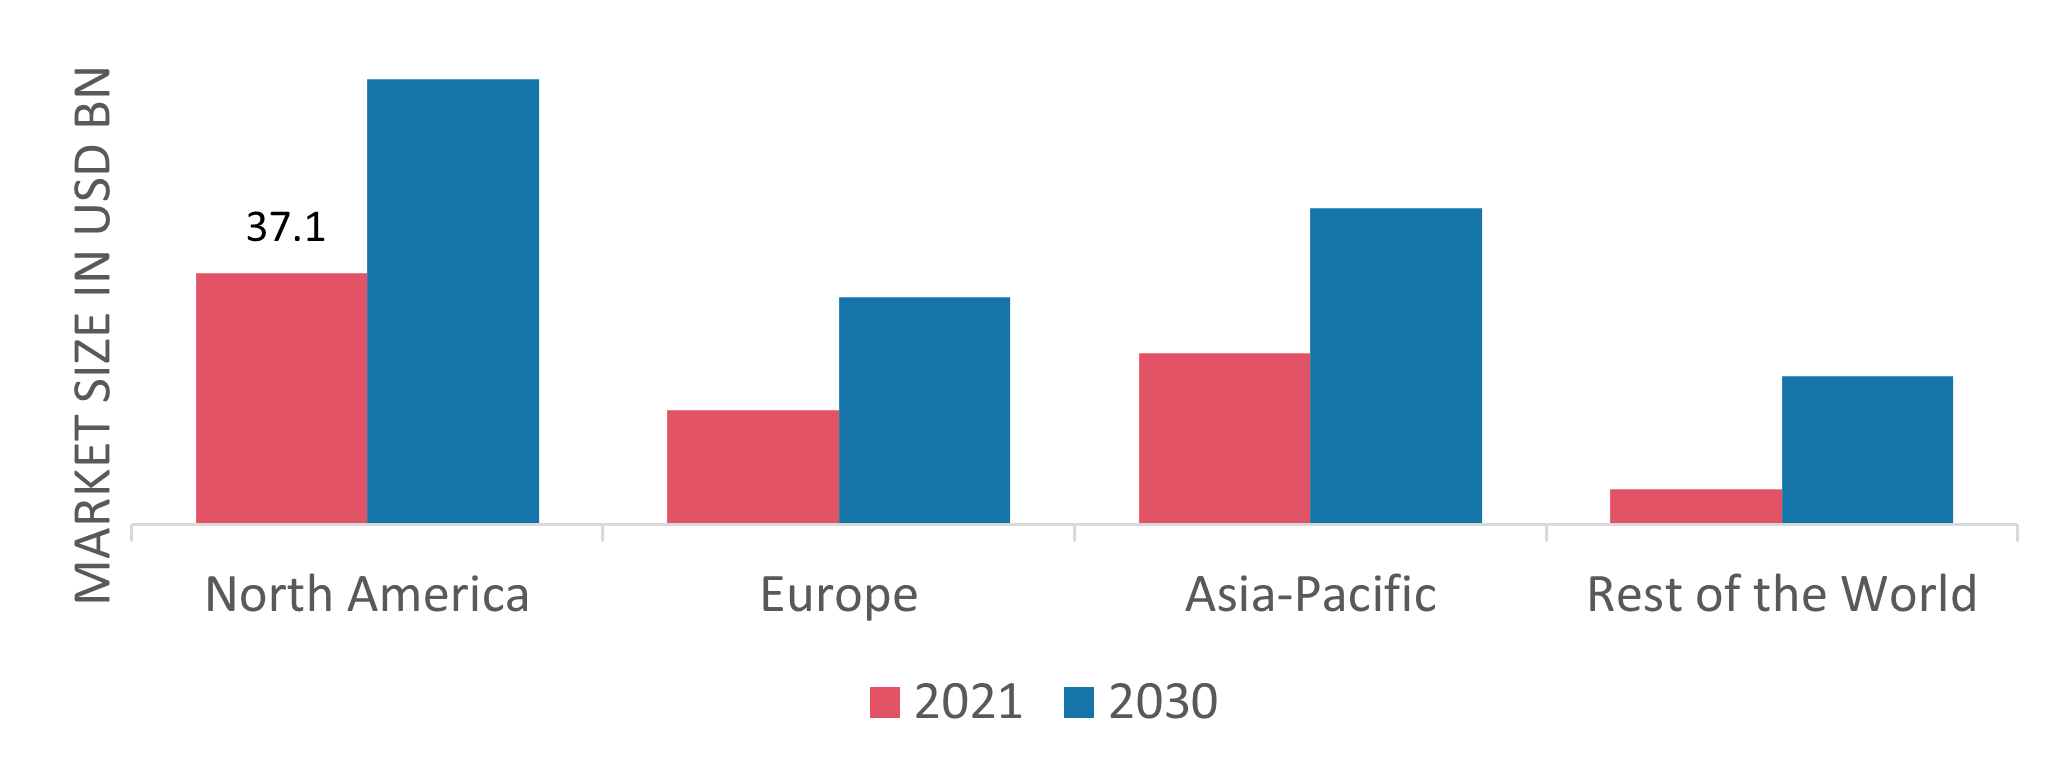 Solar Panels Market Share By Region 2021 (%)